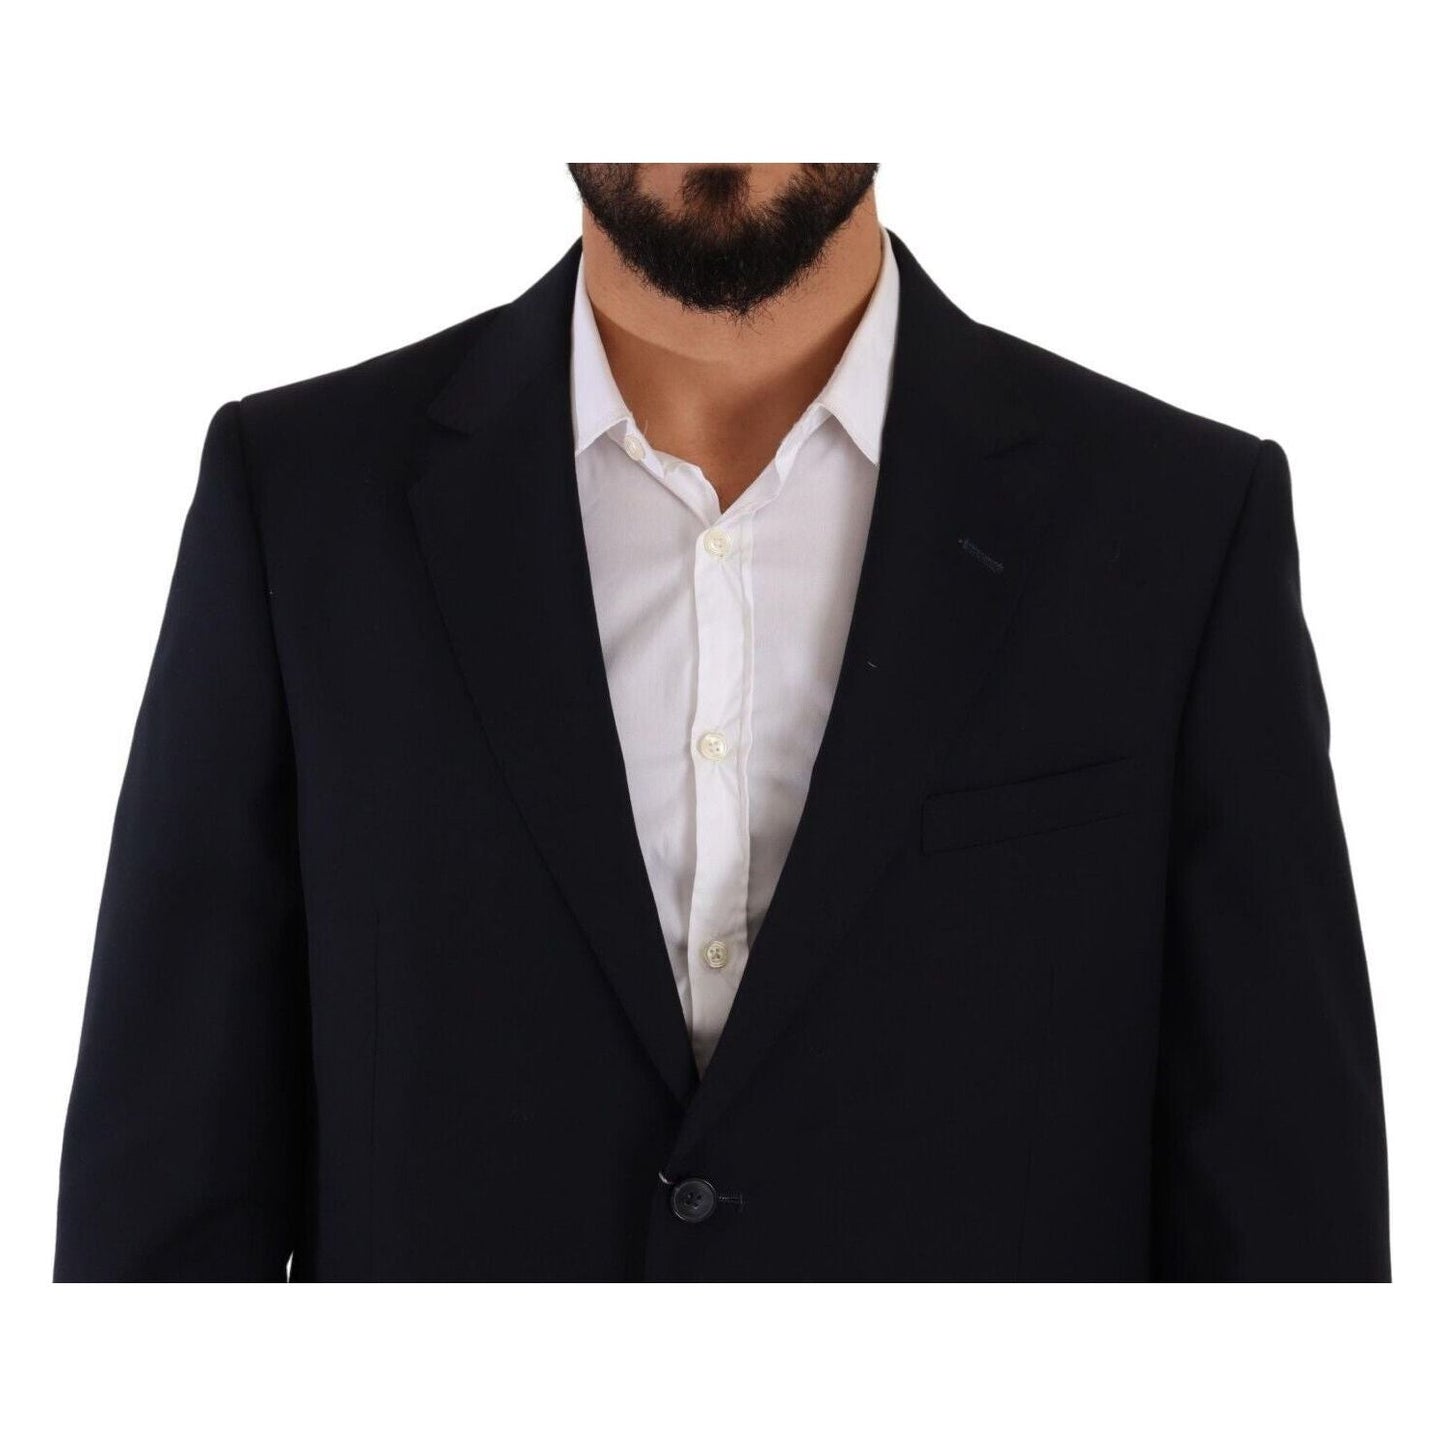 Domenico Tagliente Elegant Black Two-Piece Suit Ensemble blue-polyester-single-breasted-formal-suit-1 s-l1600-19-5-dd52f6c0-24d.jpg